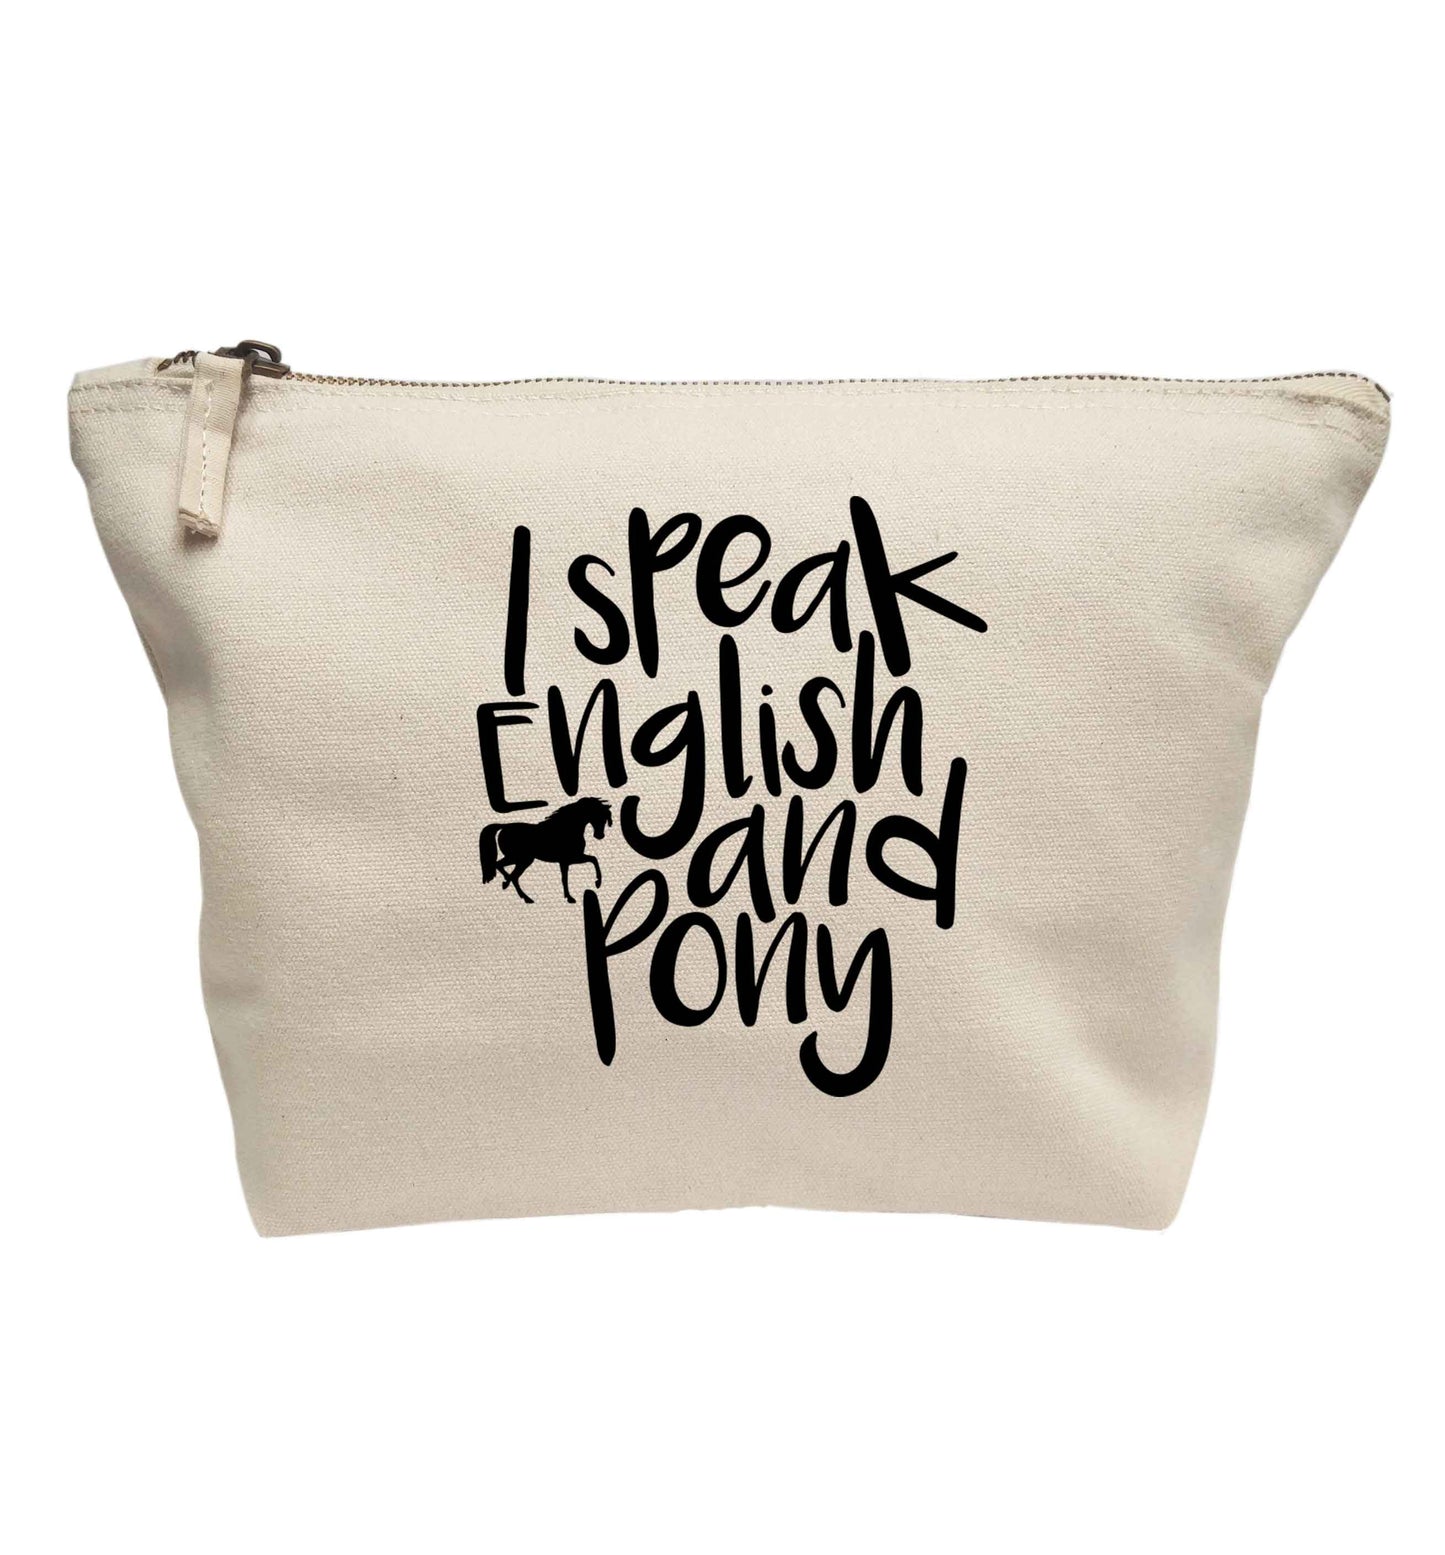 I speak English and pony | Makeup / wash bag